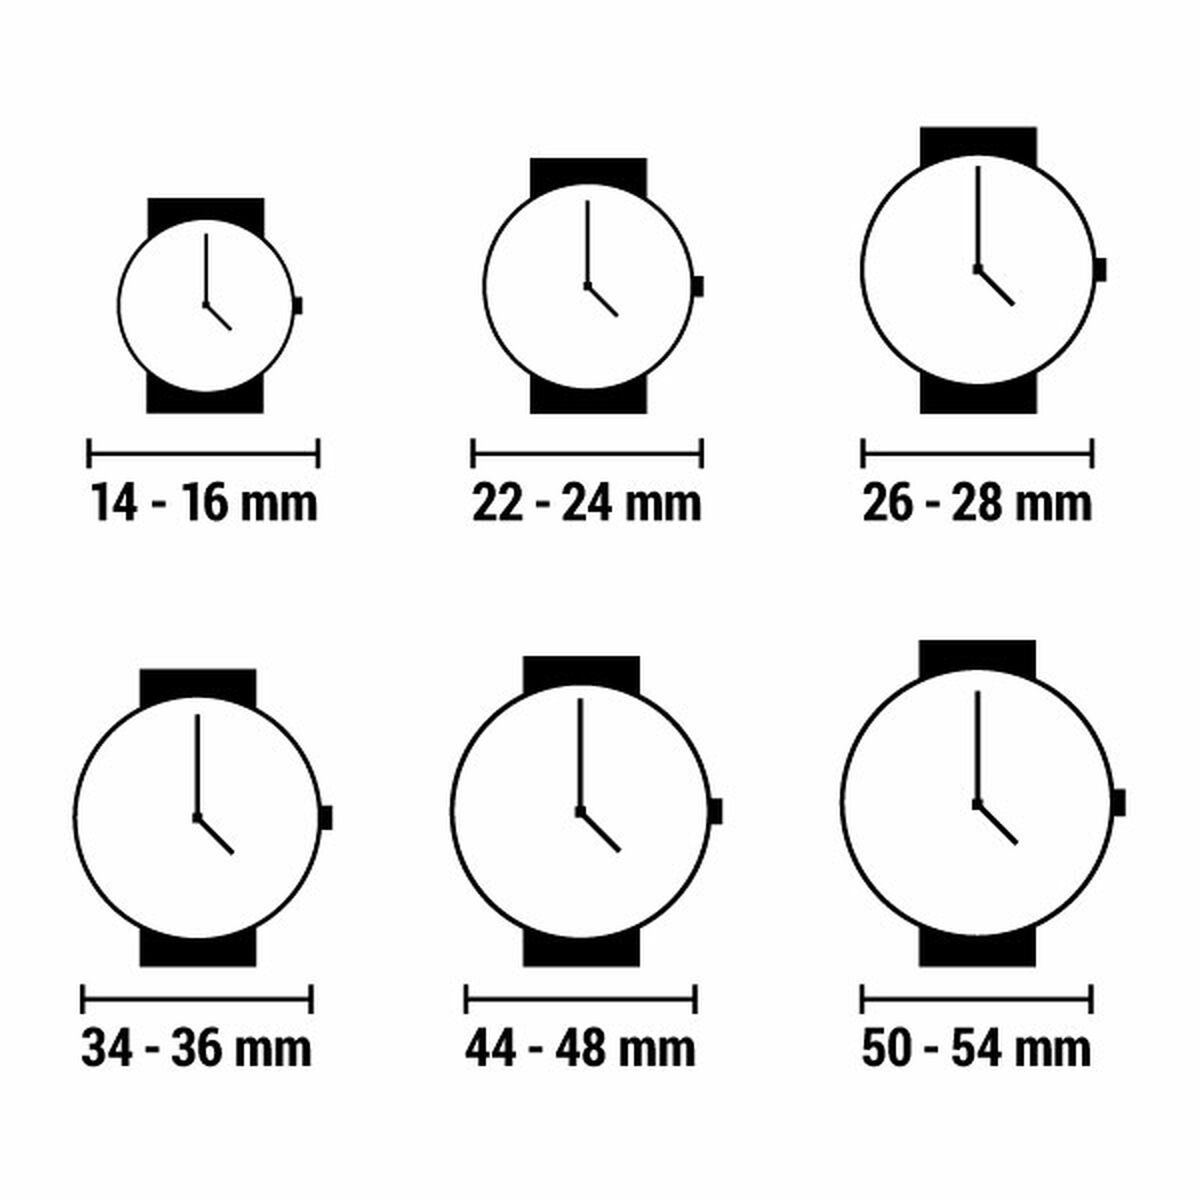 Horloge Dames Breil TW1964 (Ø 32 mm)